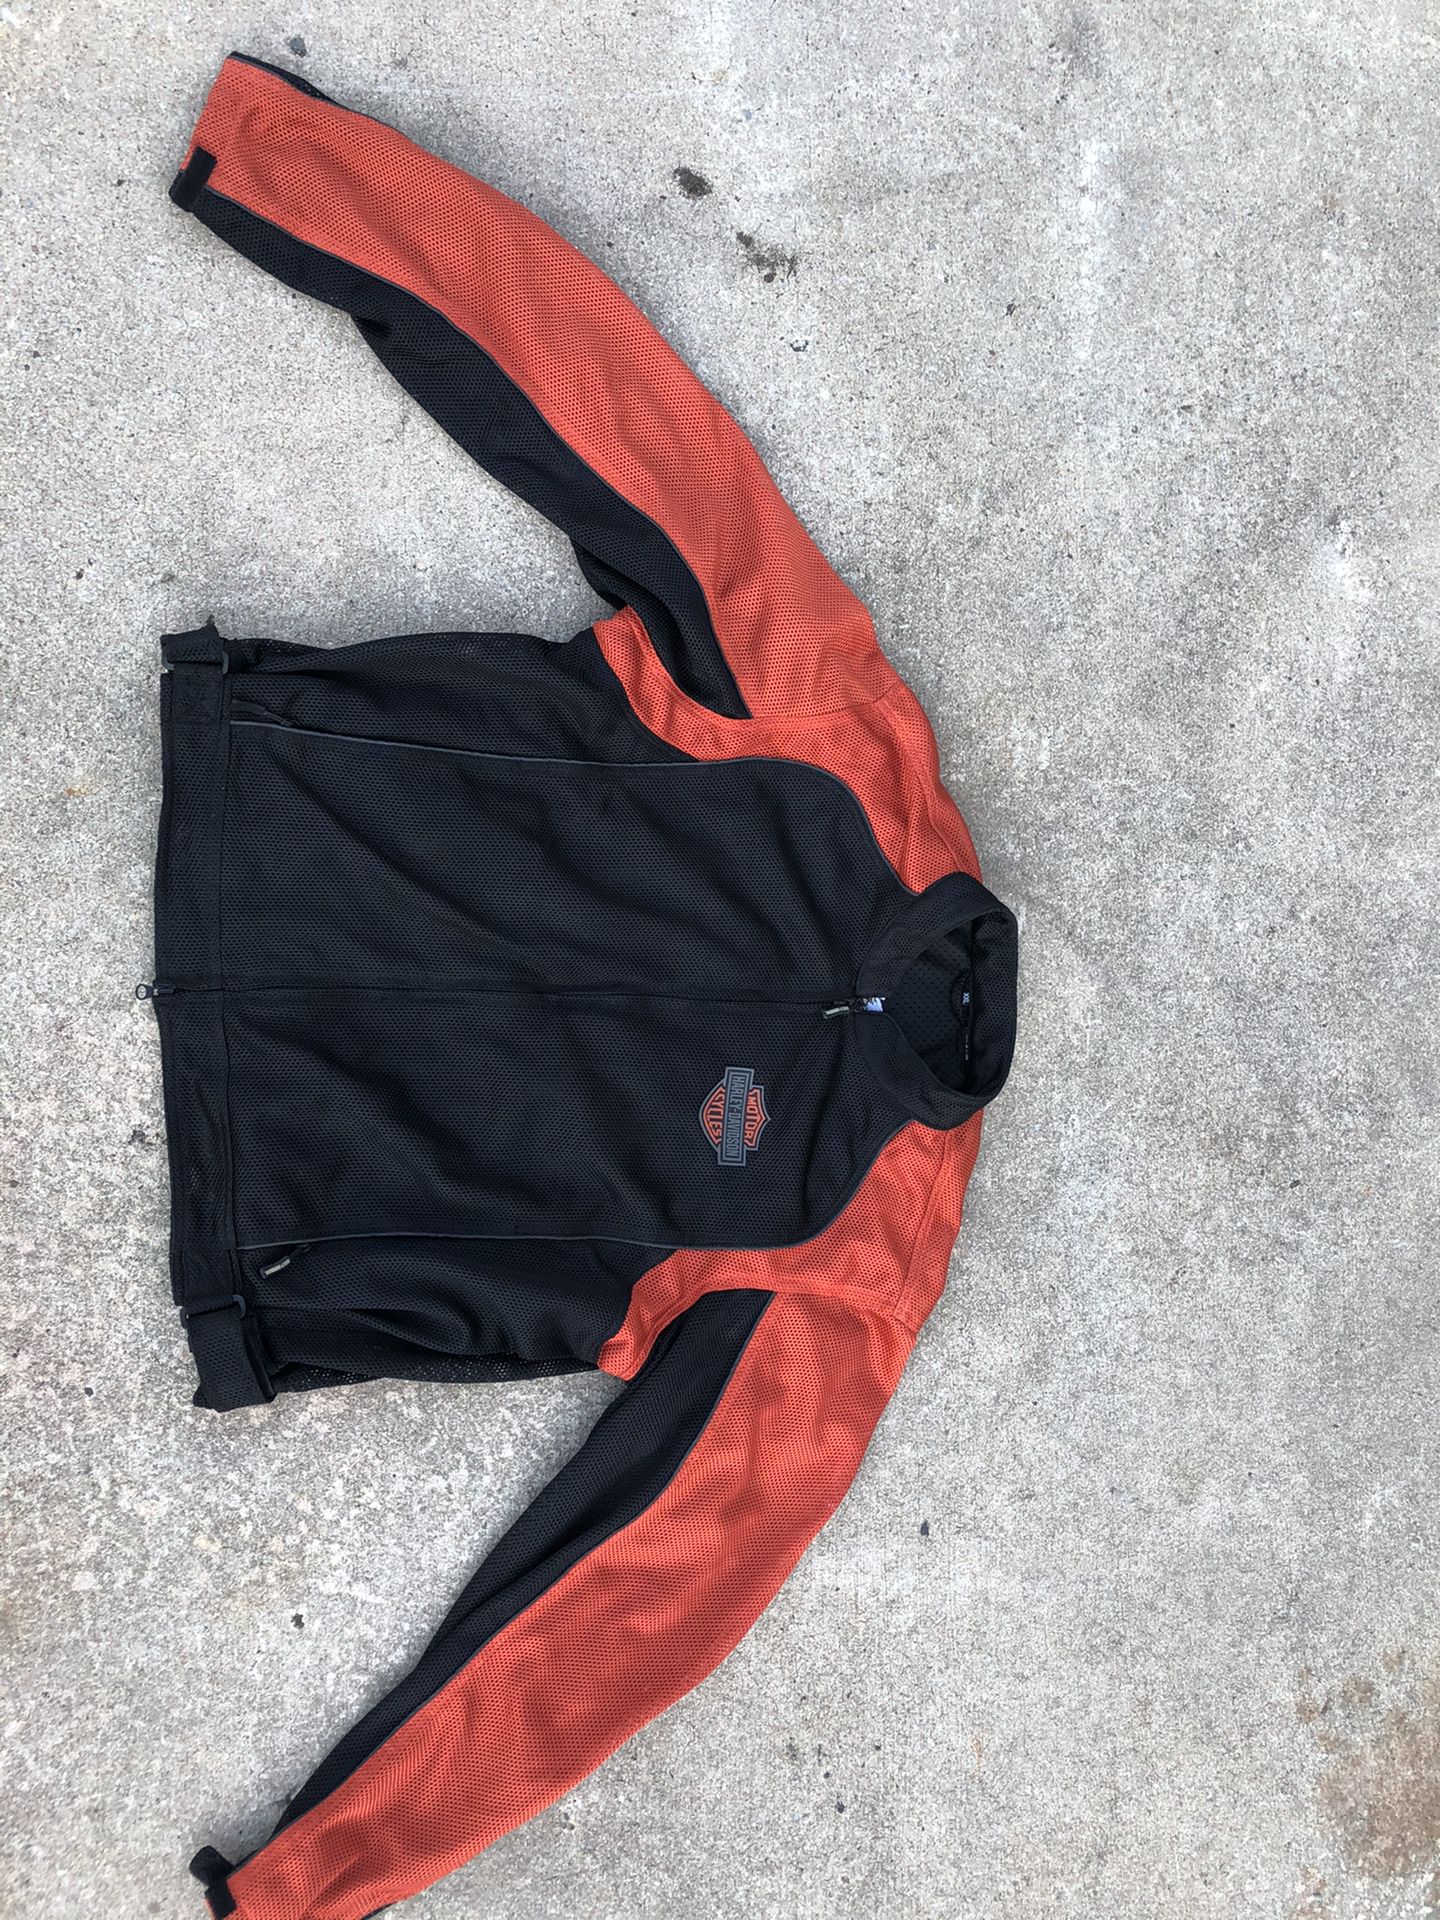 Hartley davidson black/orange mesh jacket XXL